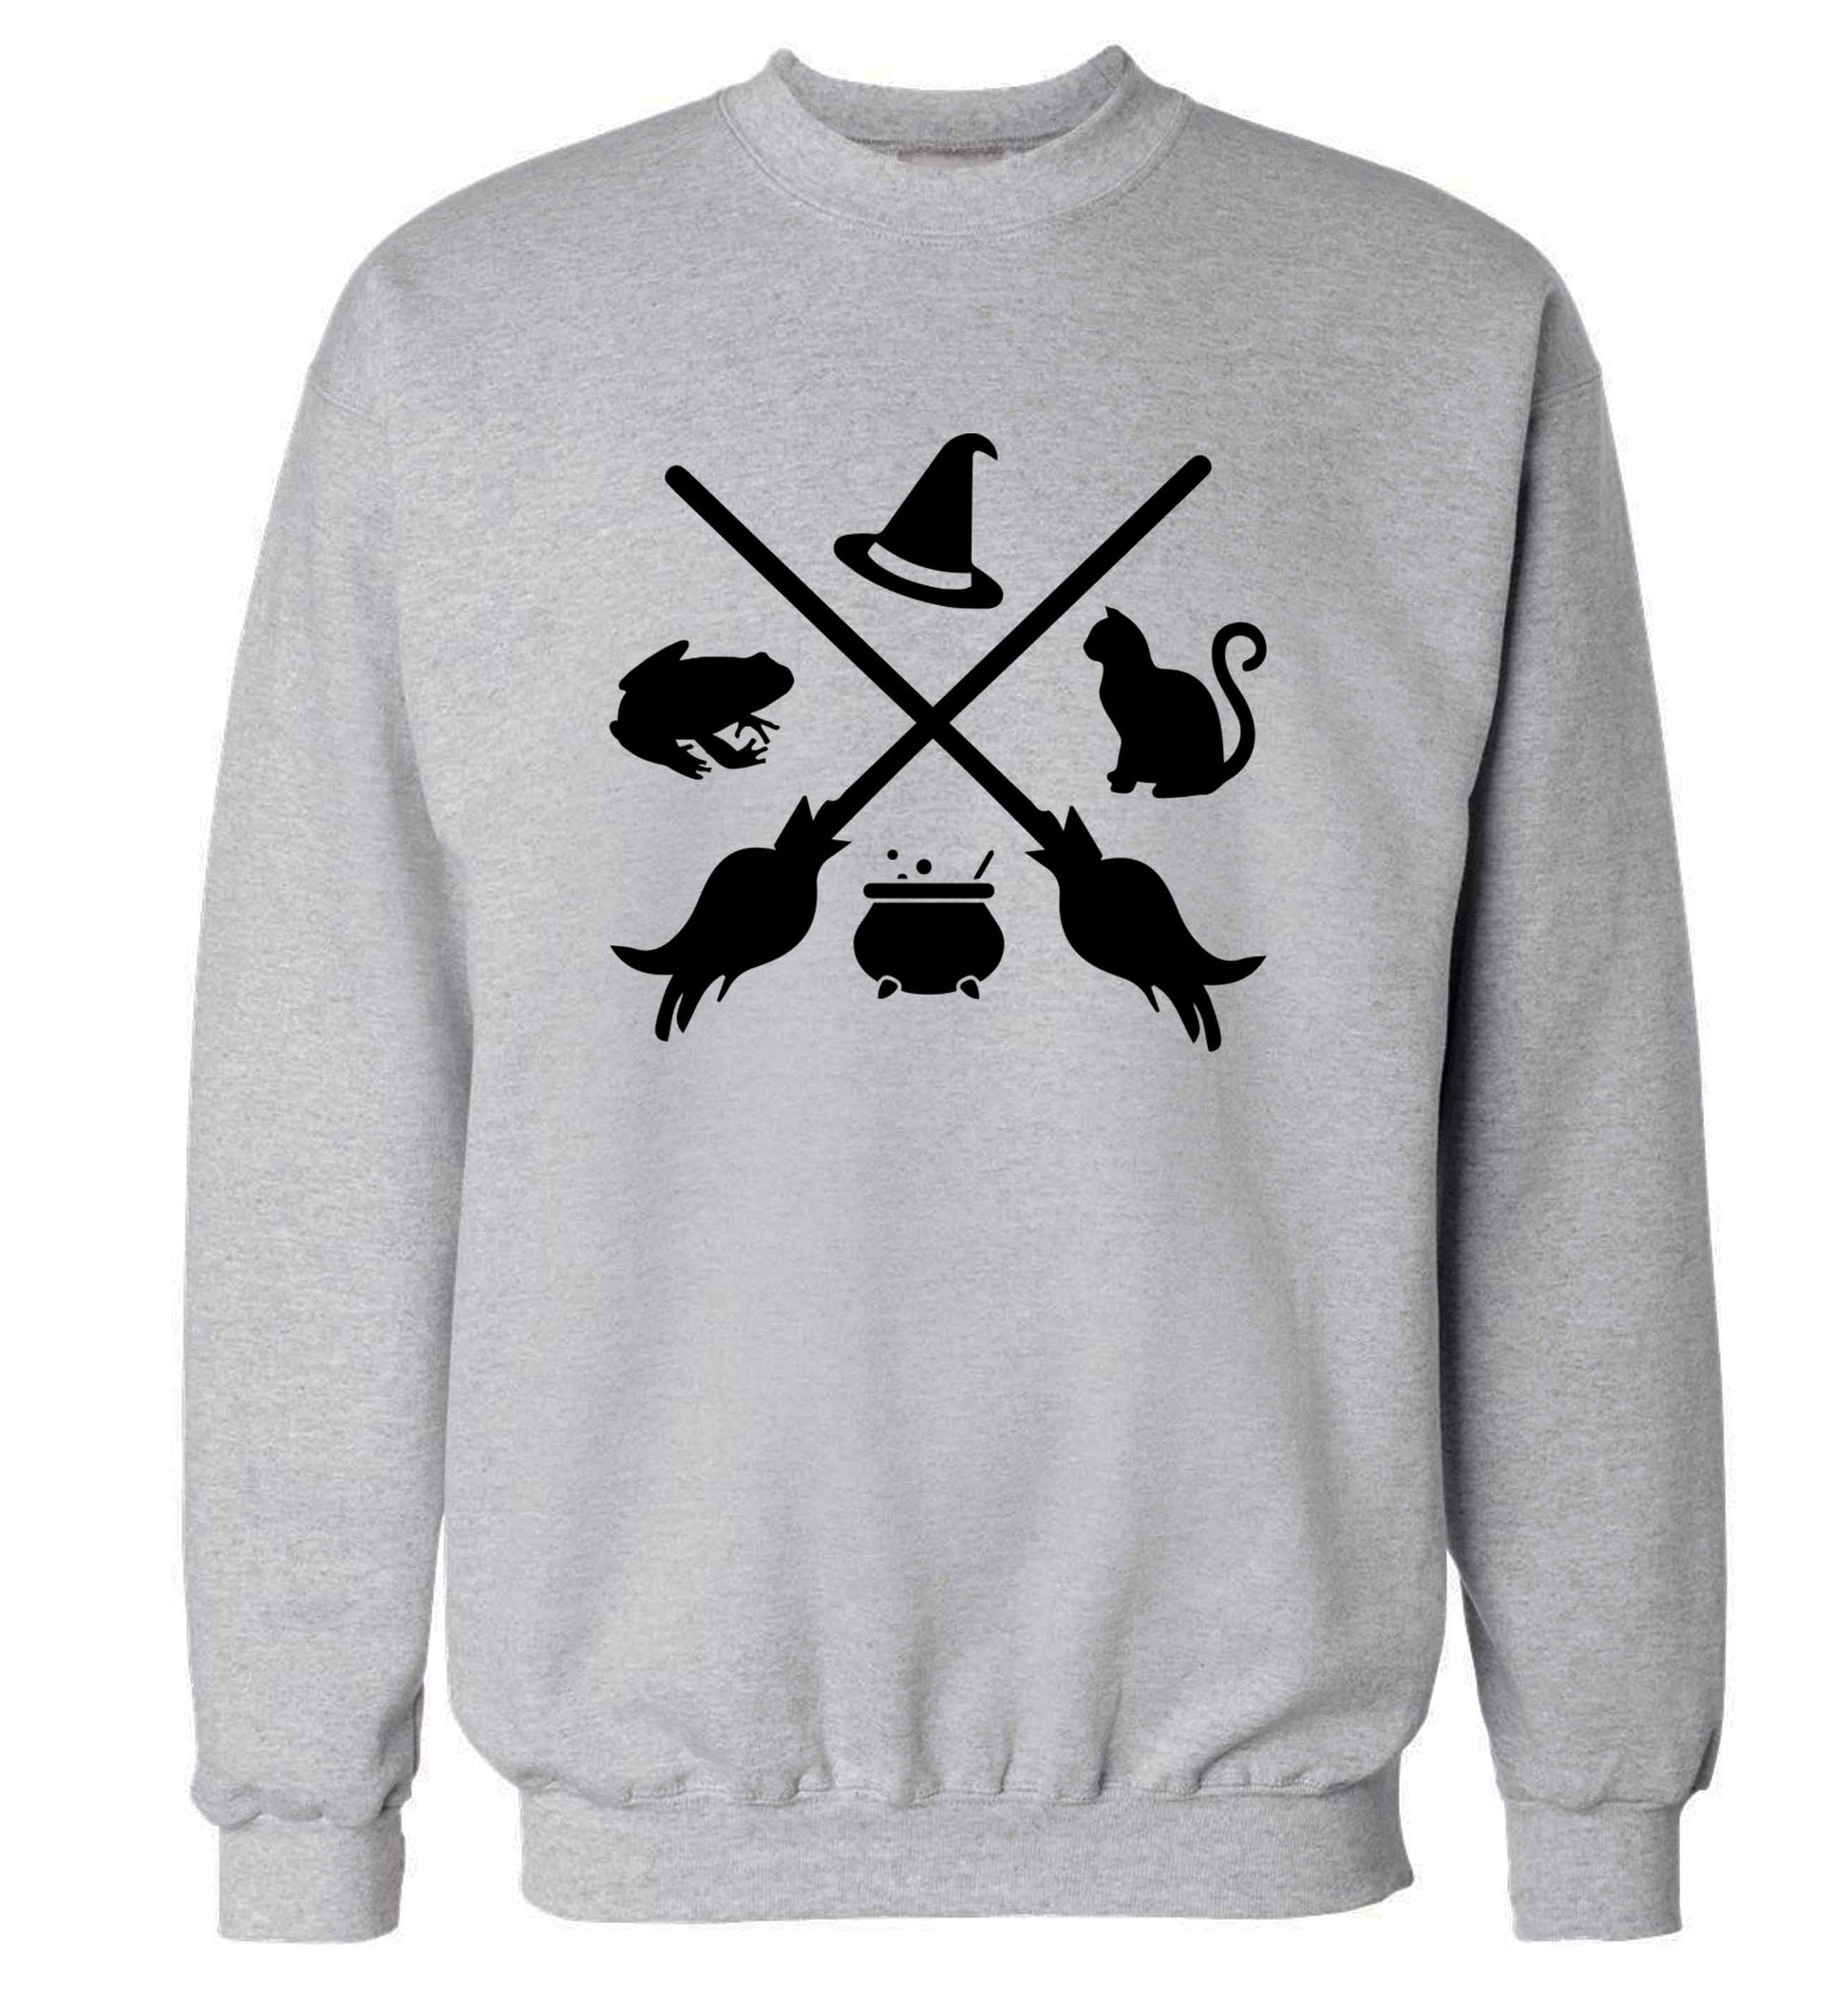 Witch symbol adult's unisex grey sweater 2XL